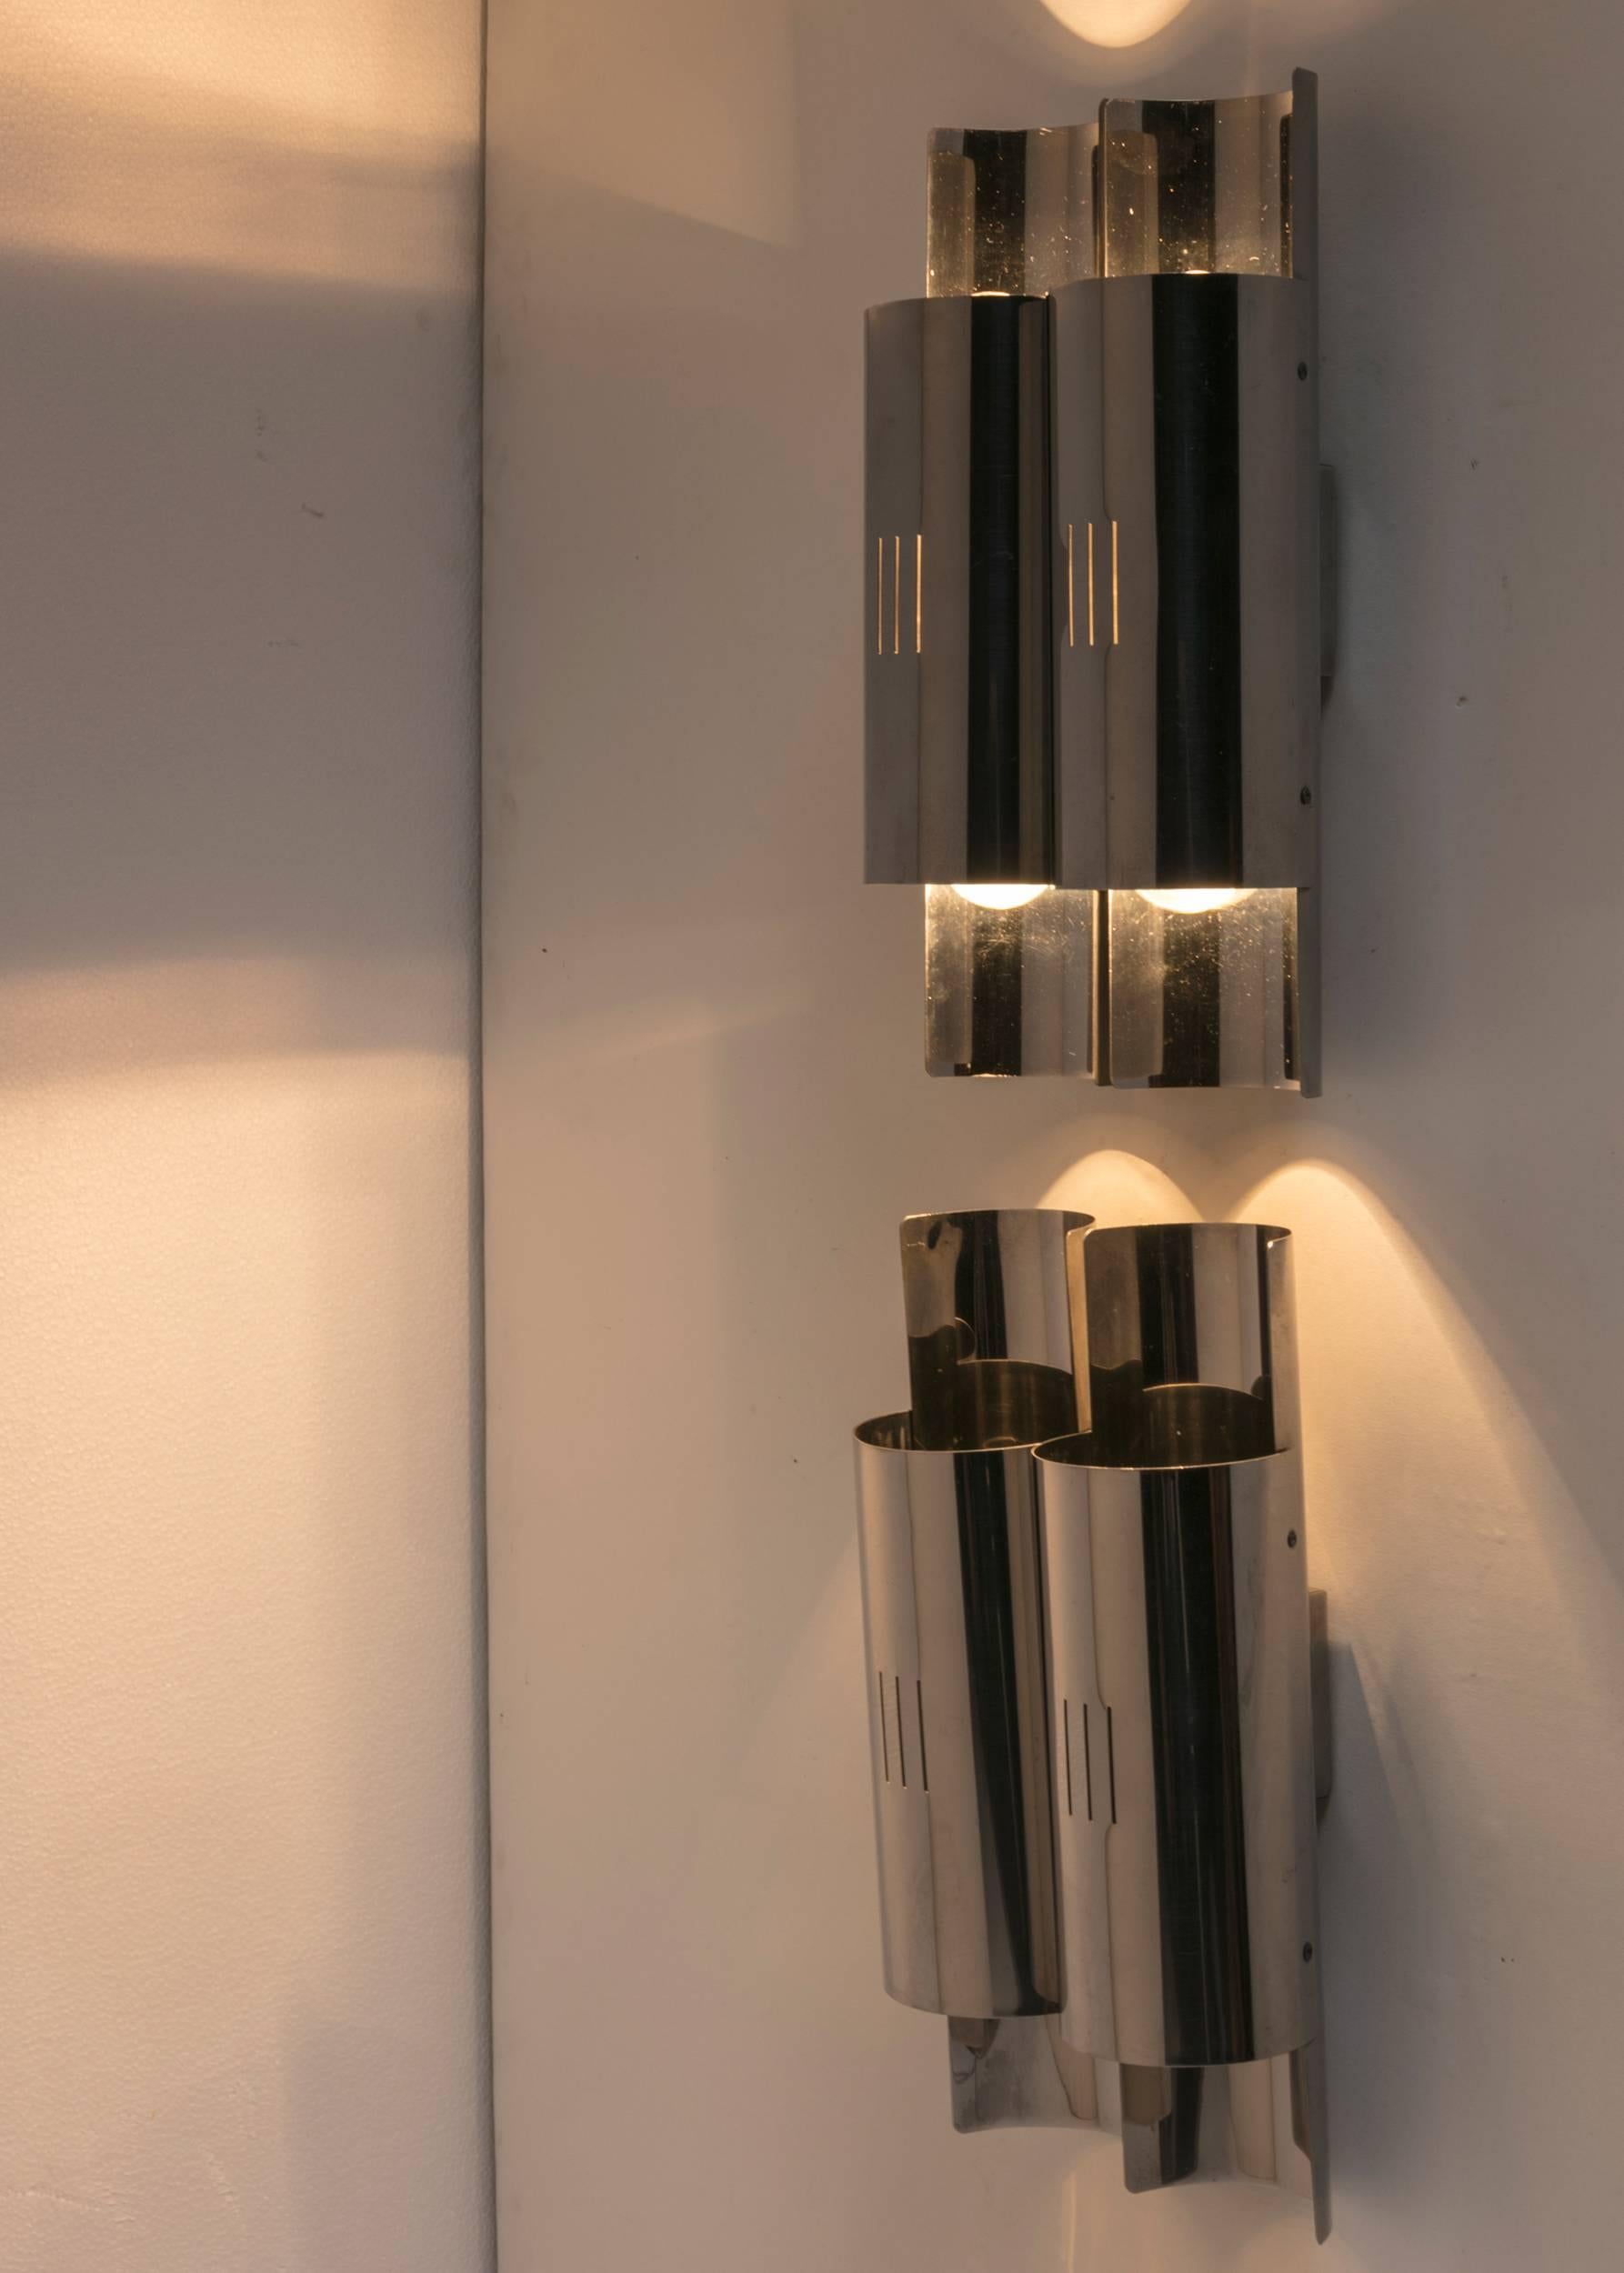 Set of two metal wall lights.
Each piece hosts four light bulbs partially hidden to create a soft and intriguing light effect.